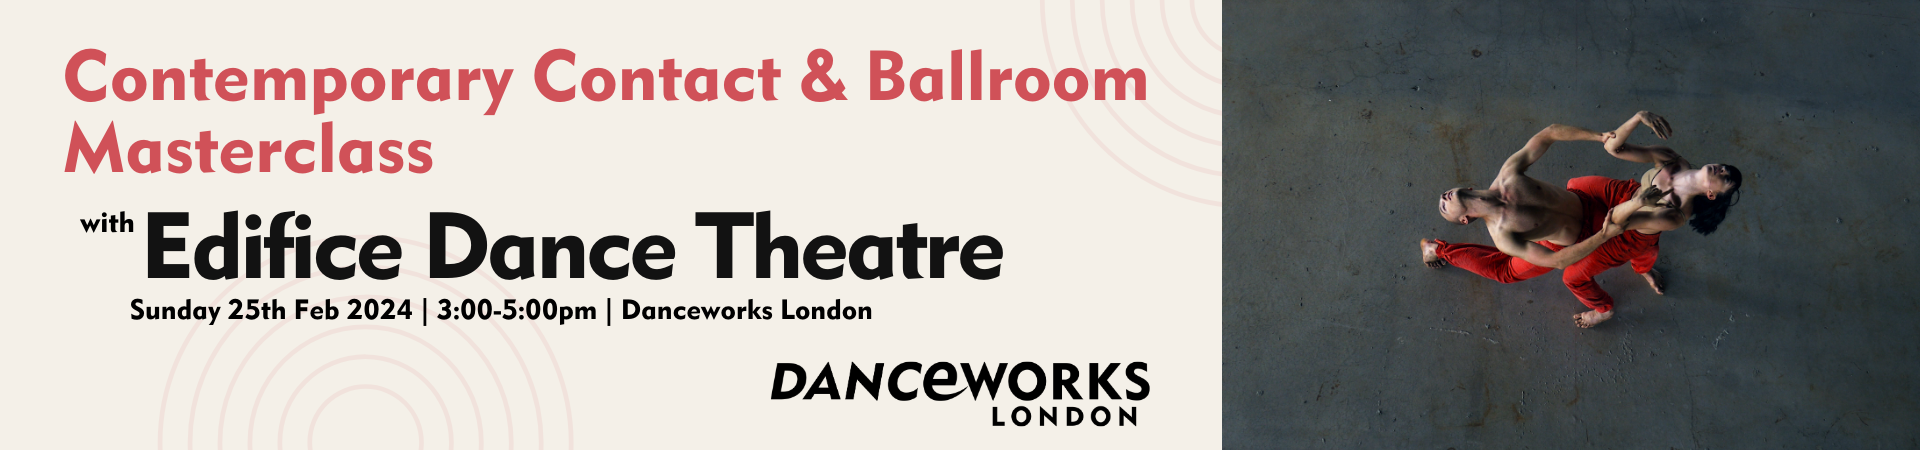 Contemporary Contact & Ballroom with Edifice Dance Theatre